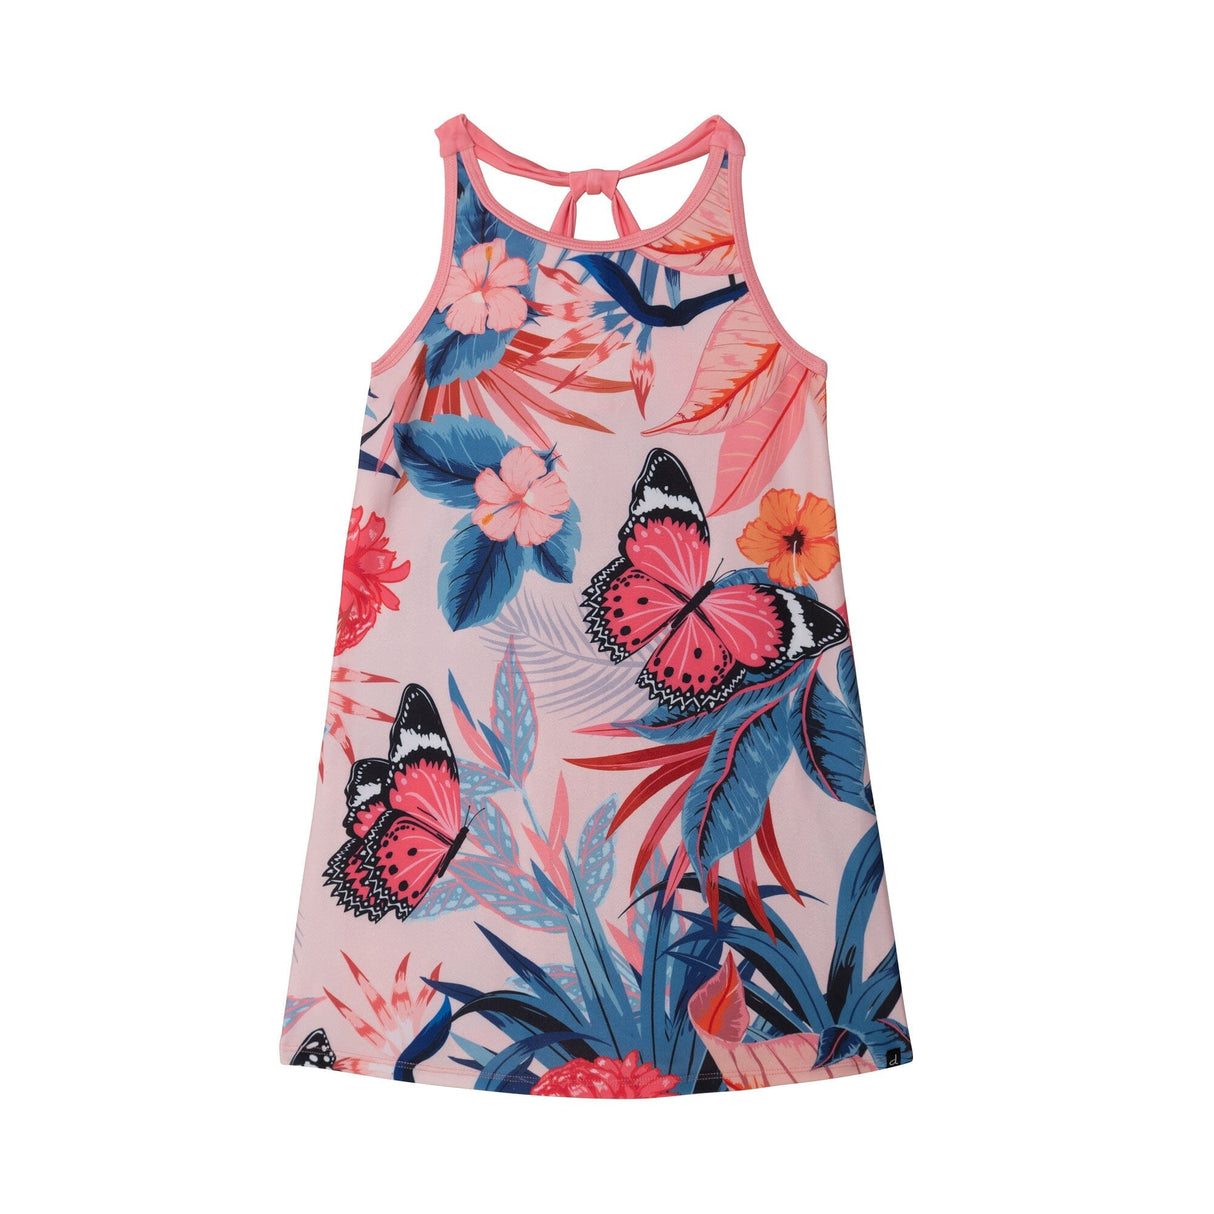 Printed Beach Dress Pink & Blue Butterflies by Deux par Deux